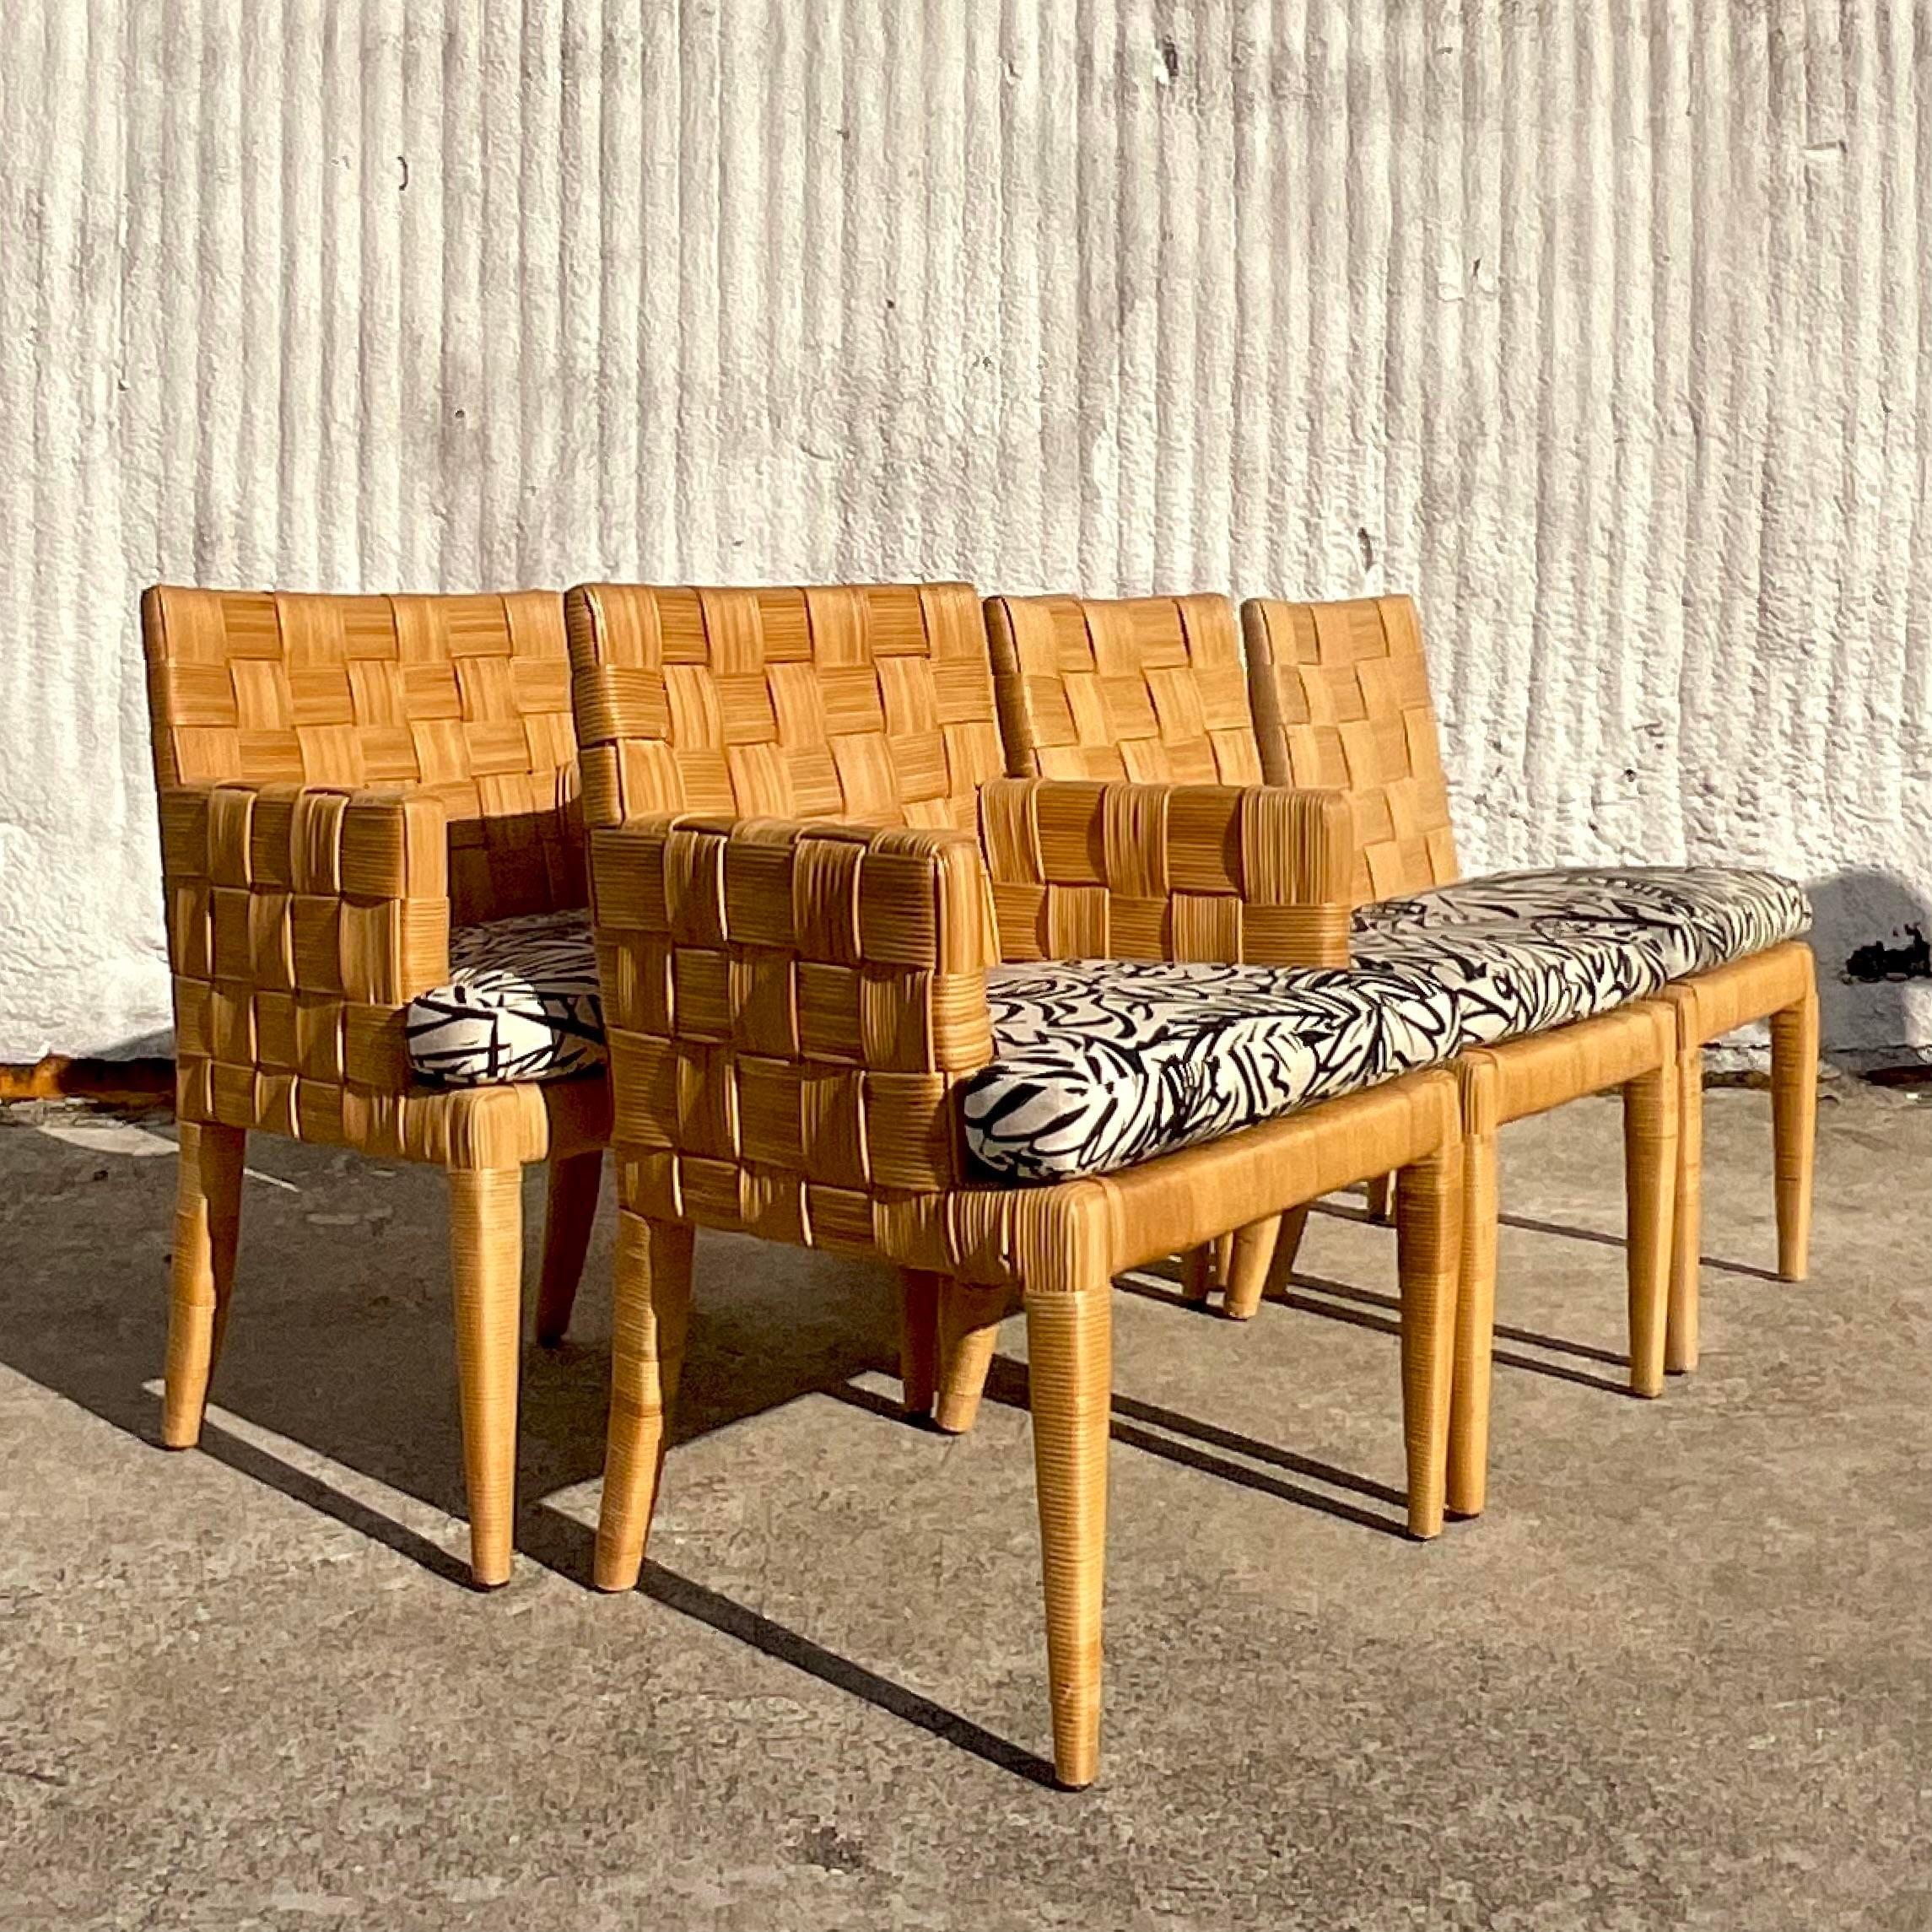 20th Century Vintage Coastal Donghia “Block Island” Woven Rattan Chairs - Set of 6